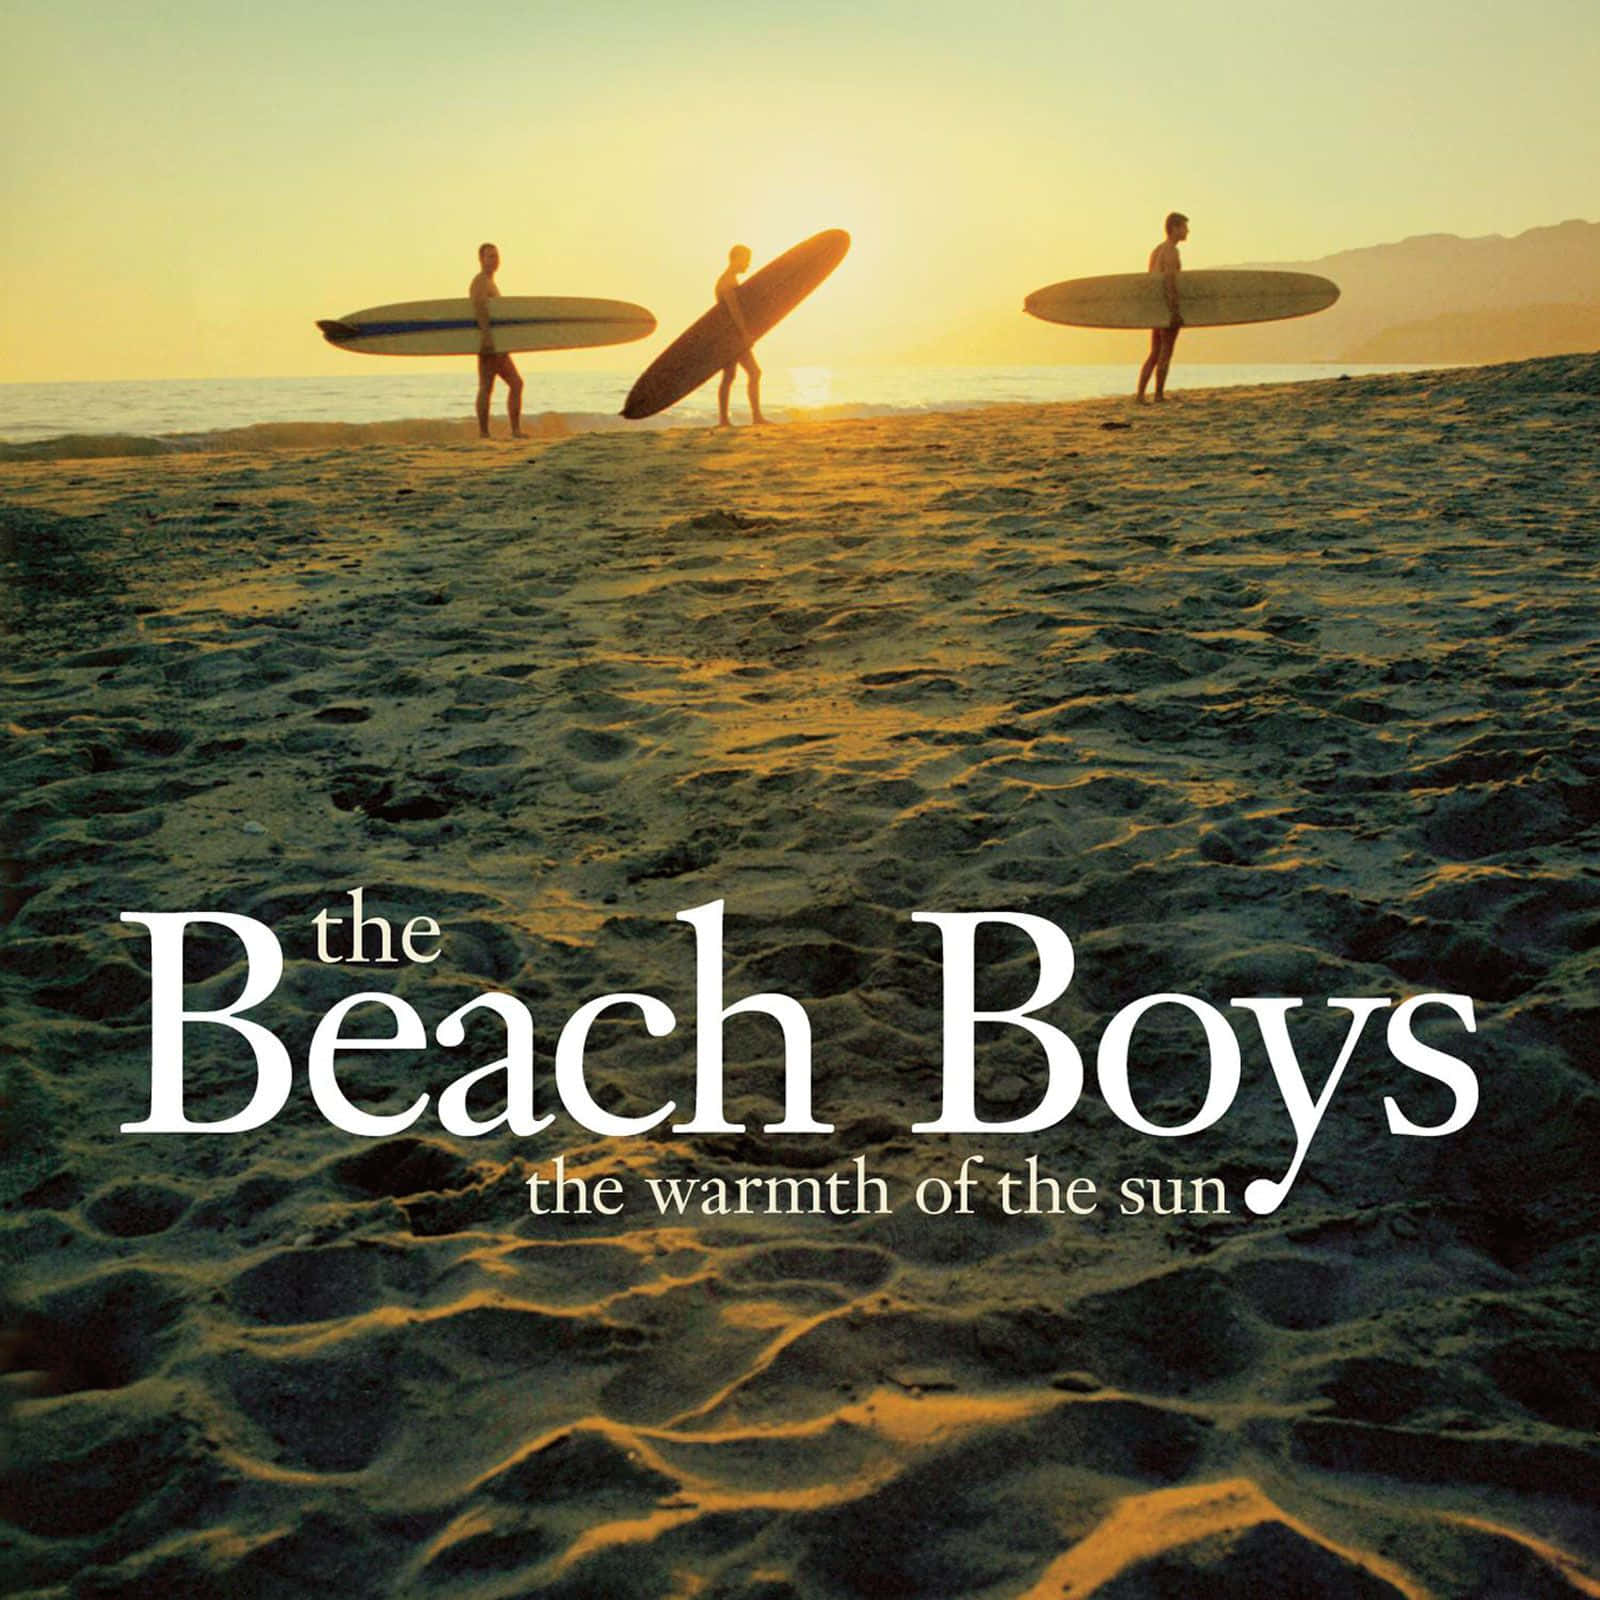 Beach Boys The Warmth Of The Sun Album Cover Wallpaper